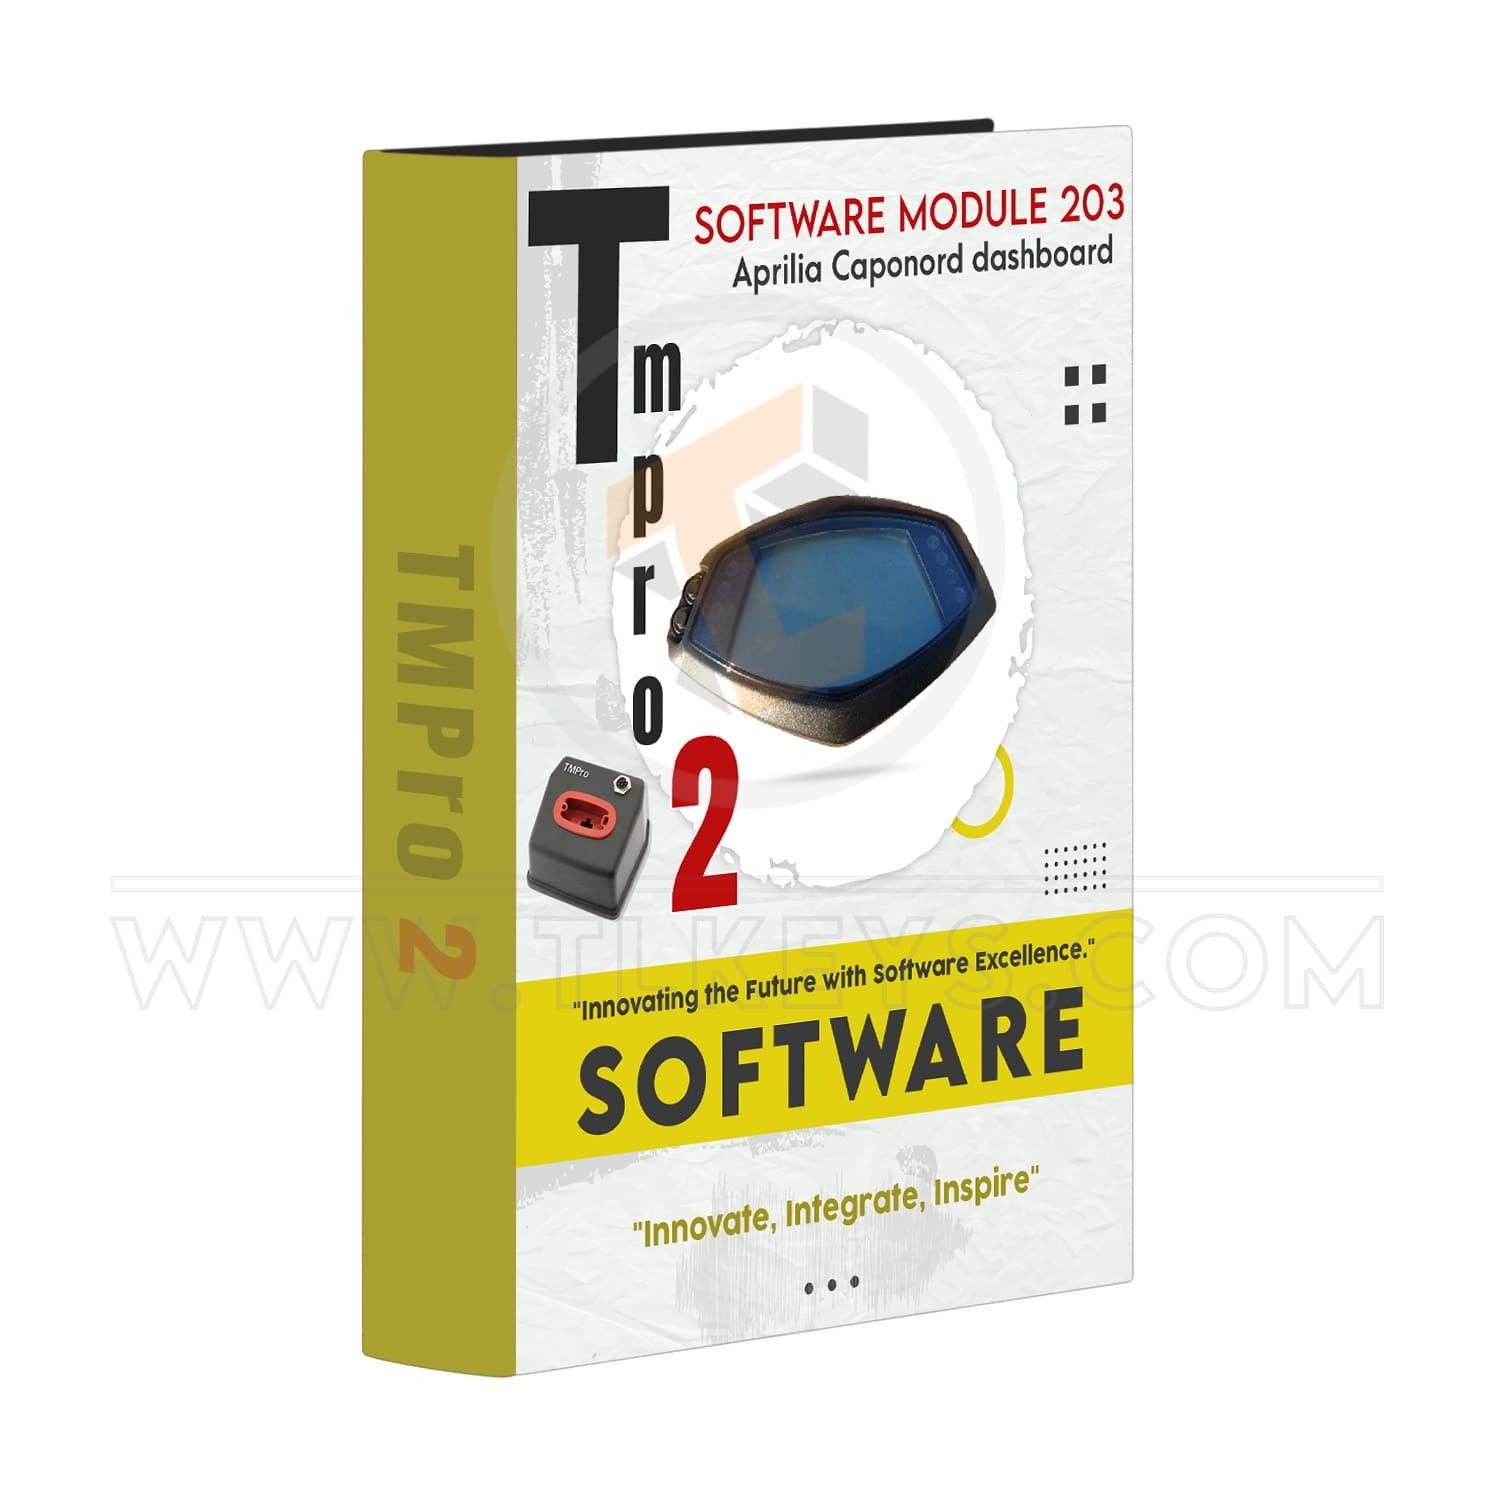 Tmpro 2 Tmpro 2 Software module 203 – Aprilia Caponord dashboard software